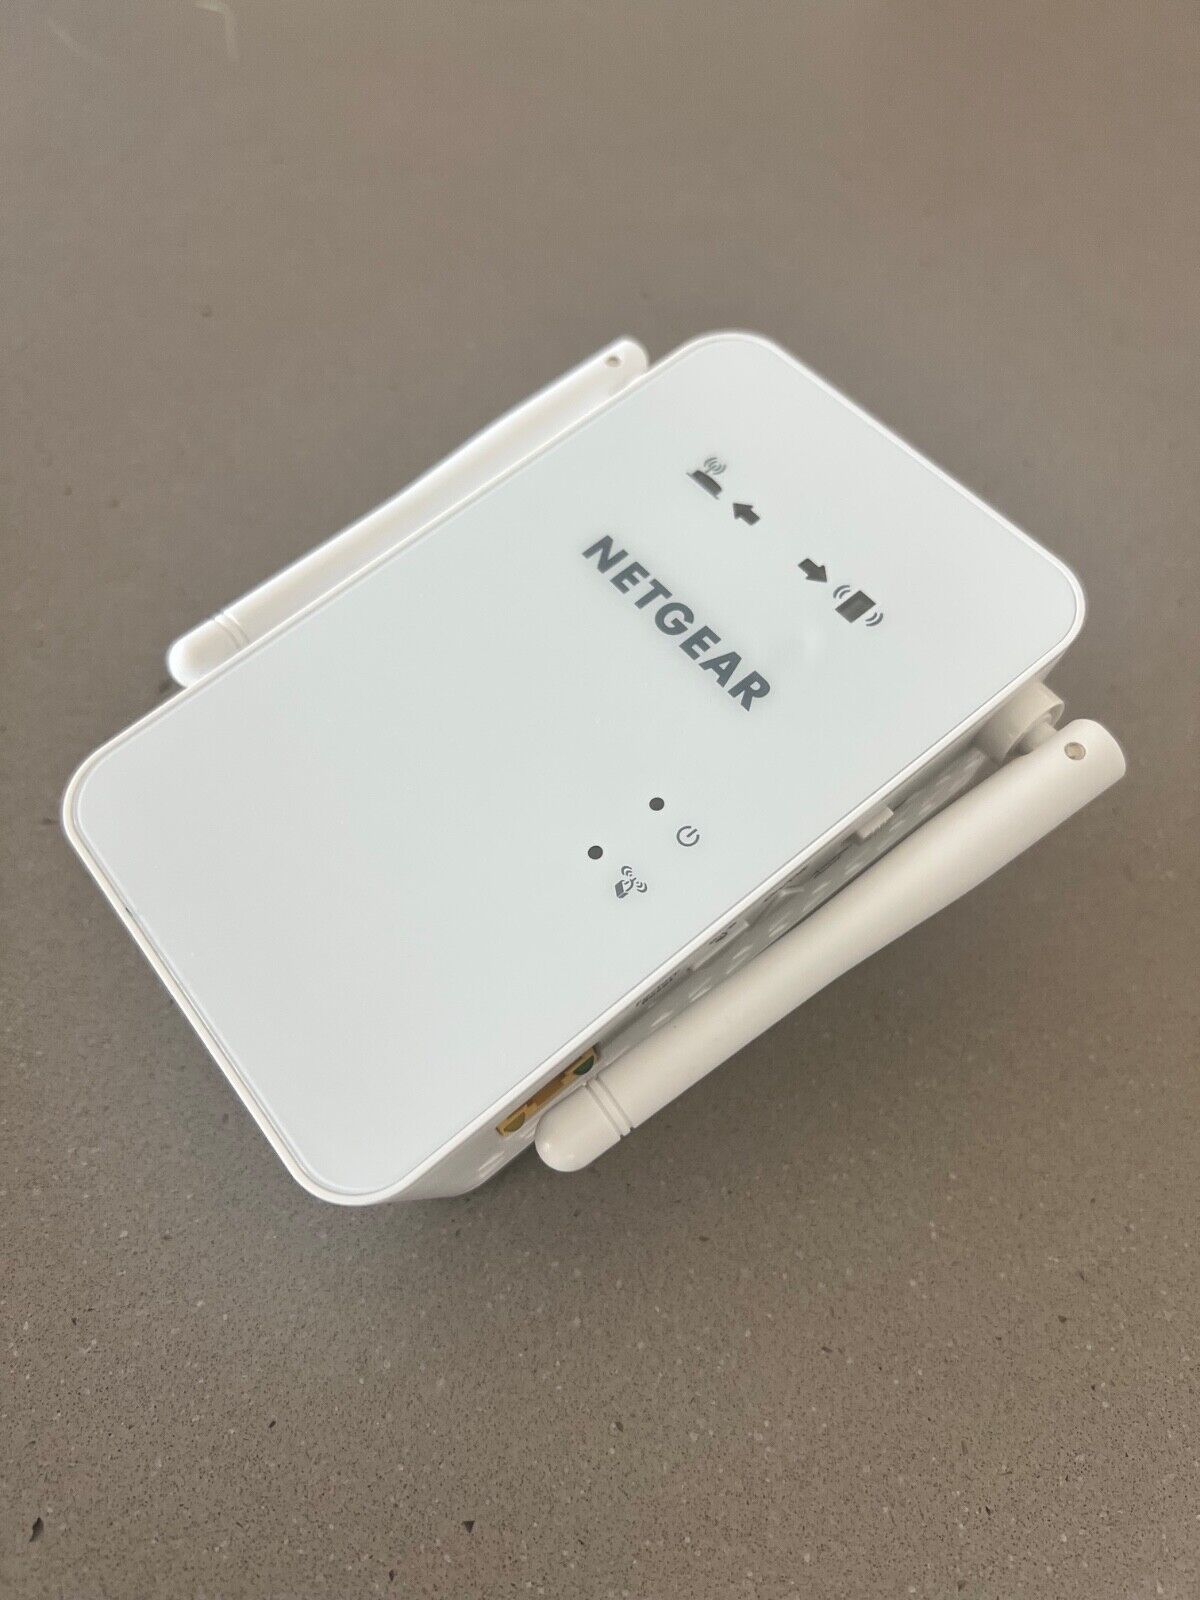 NETGEAR AC1200 Wi-Fi Range Extender (EX6100)v2 FREE SHIPPING - $19.31